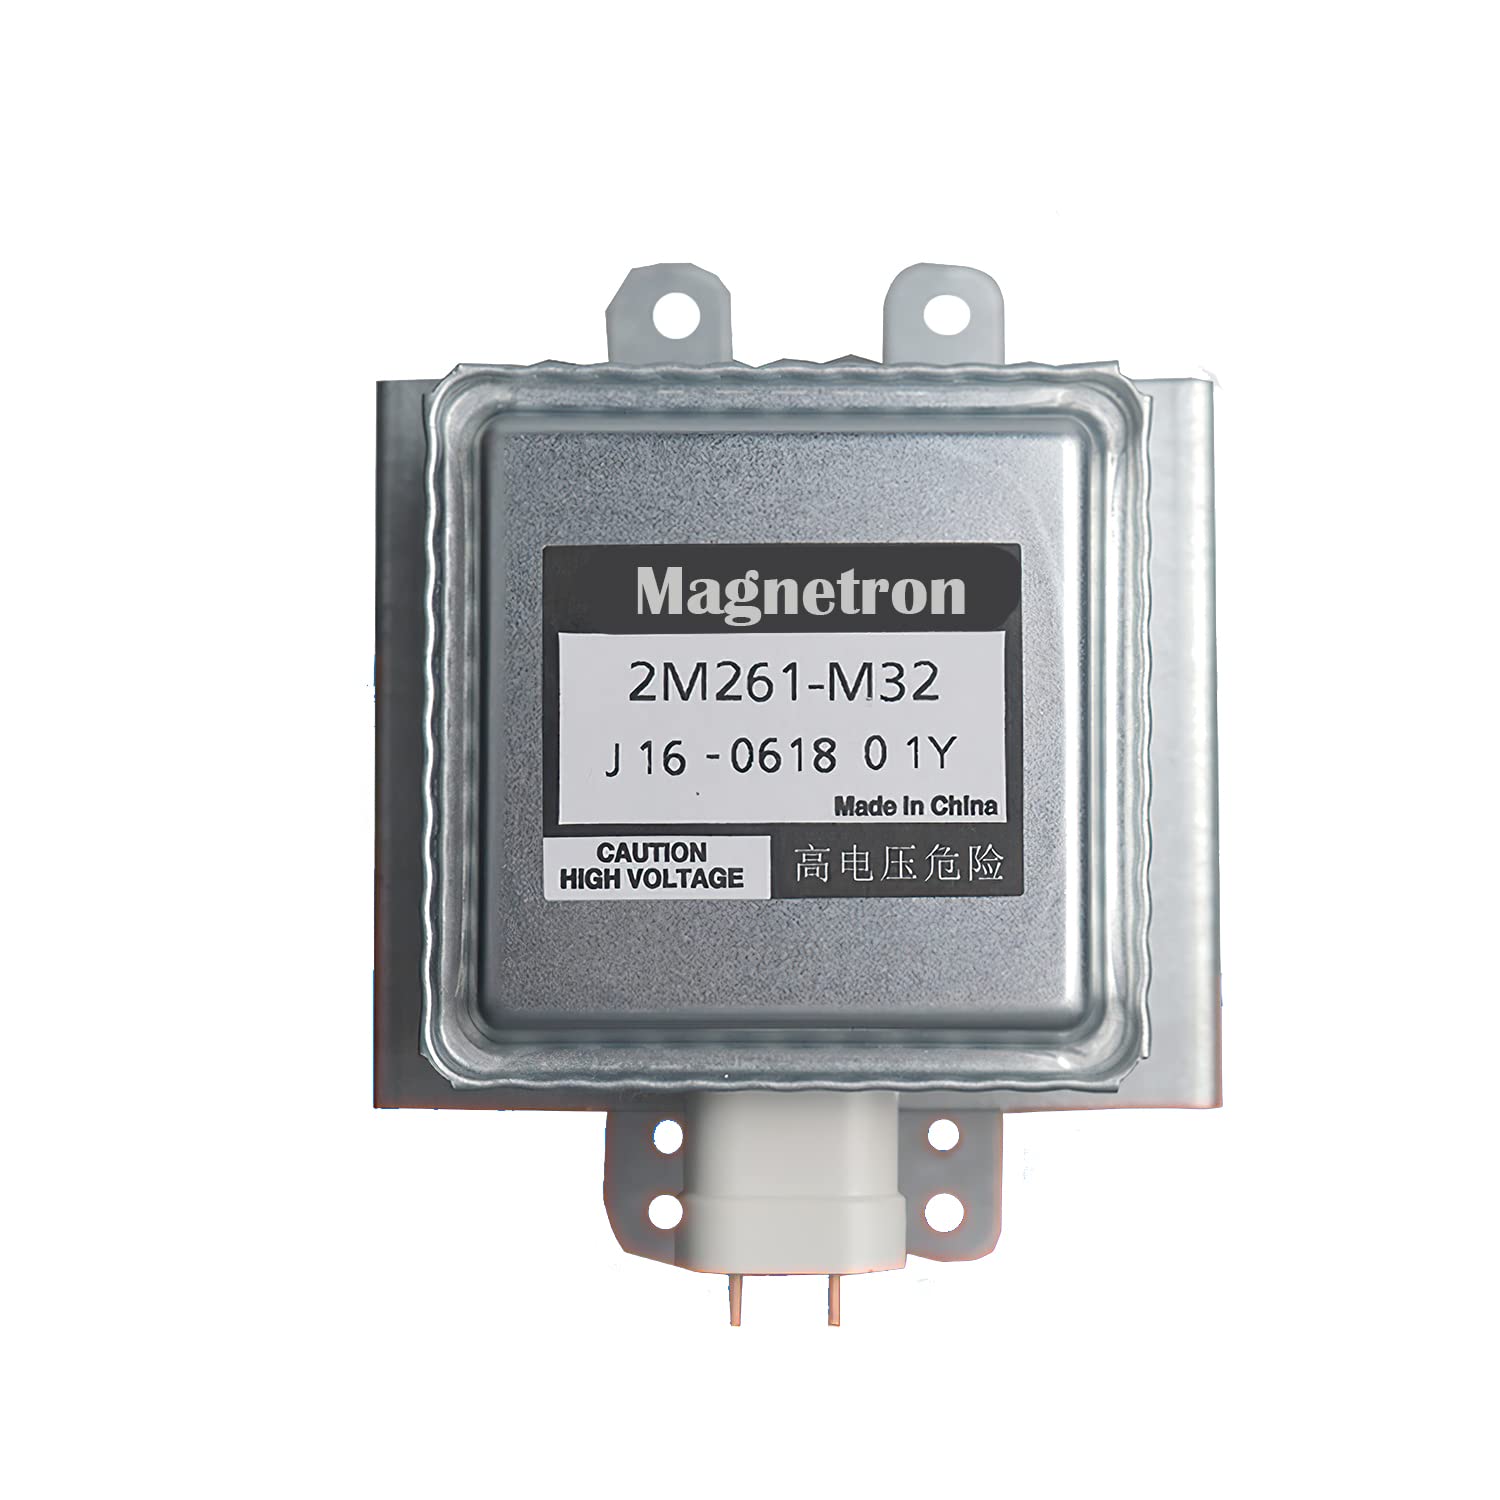 Magnetron 2M261-M32 für Panasonic Frequenzumwandlung Mikrowelle NN-SF464MBPQ NN-SF464M NN-SF550W NN-CS596S Reparaturteile ersetzen 2M368H(L) R-395 2M236-M32 2M23 6-M42 2M291-M32 2M292-M32 Magnetron